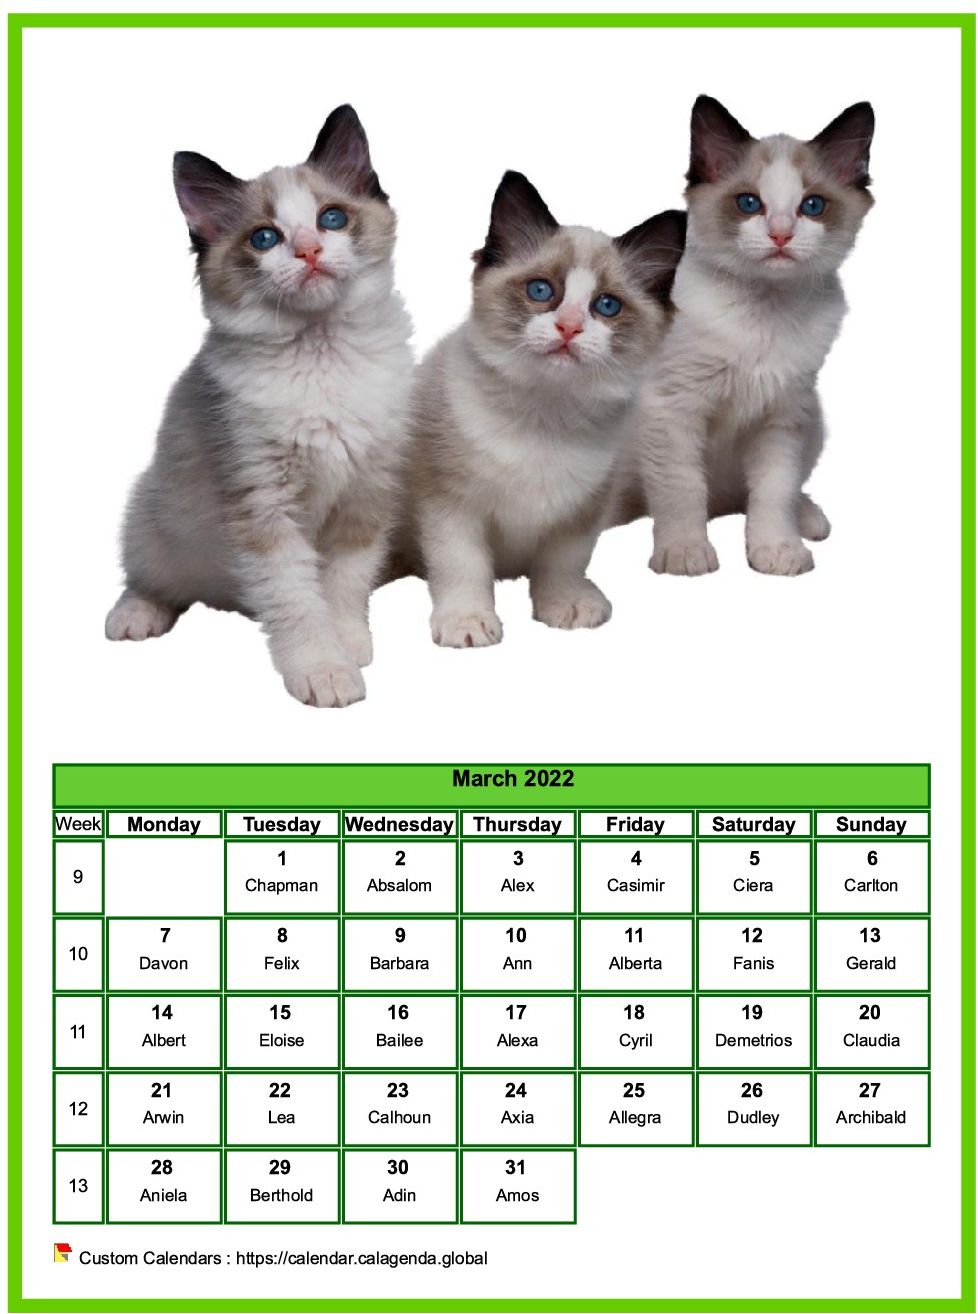 Calendar March 2022 cats